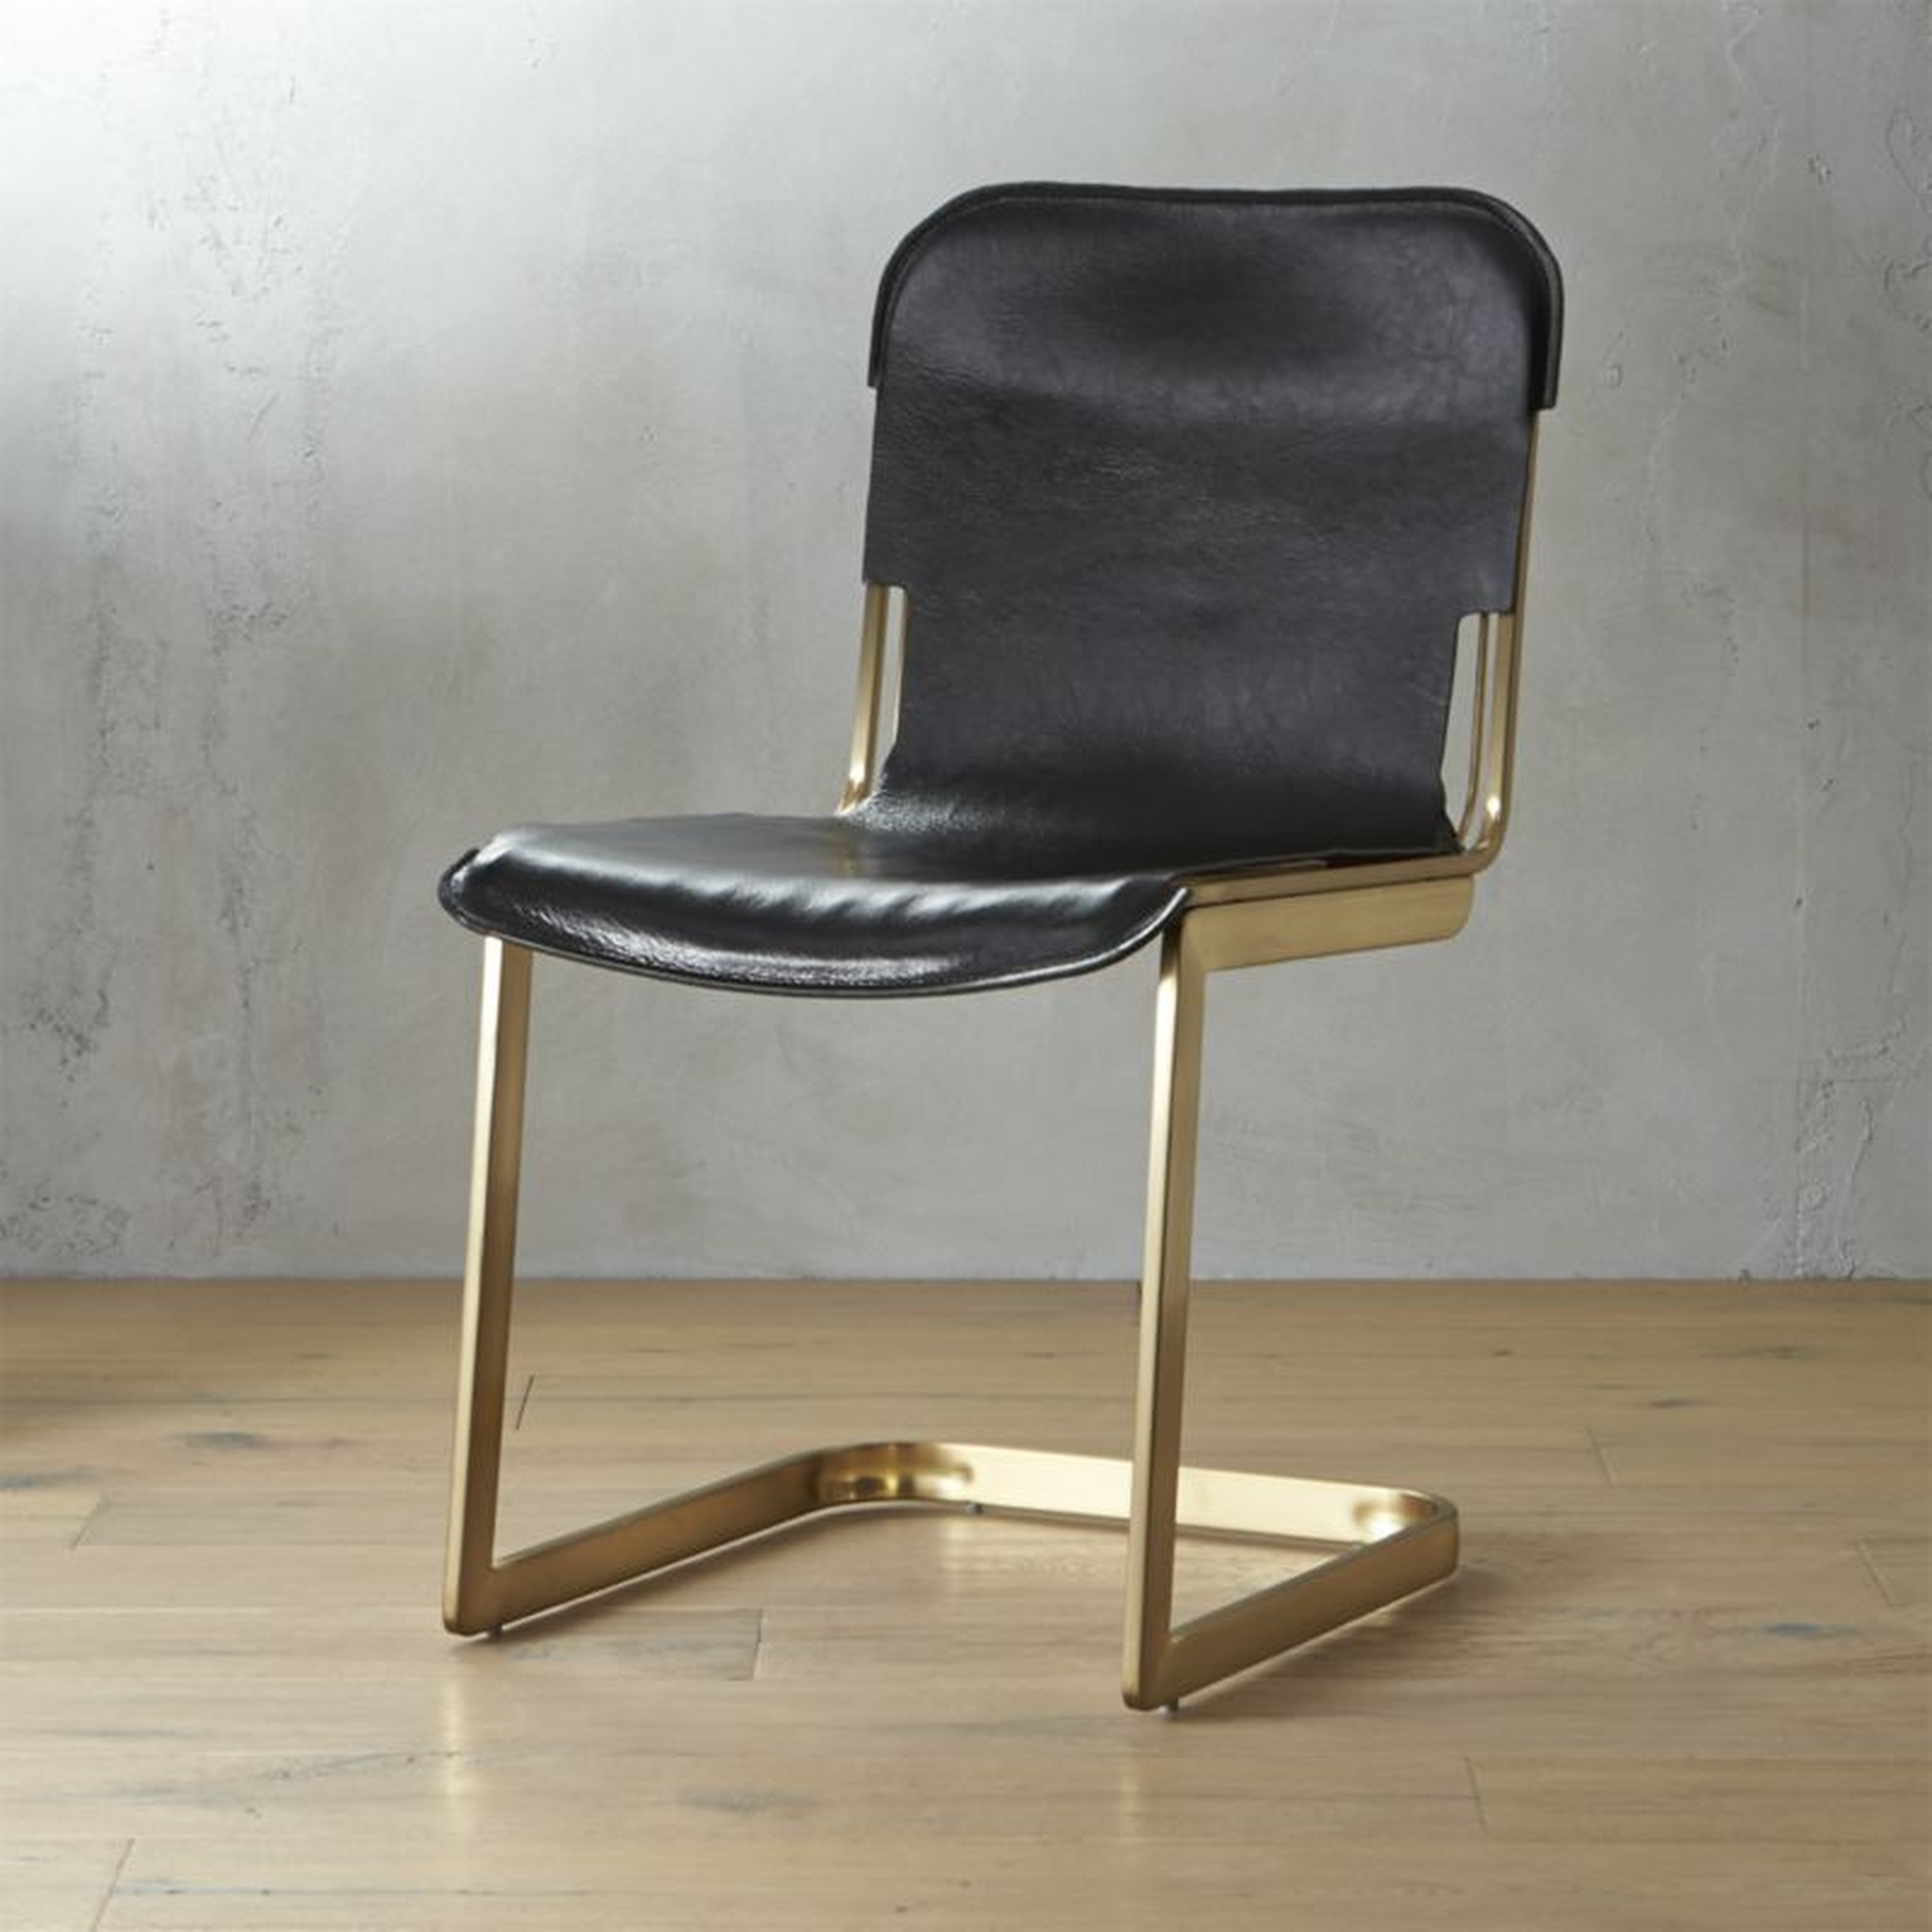 Rake Black Leather Chair by Kravitz Design - CB2